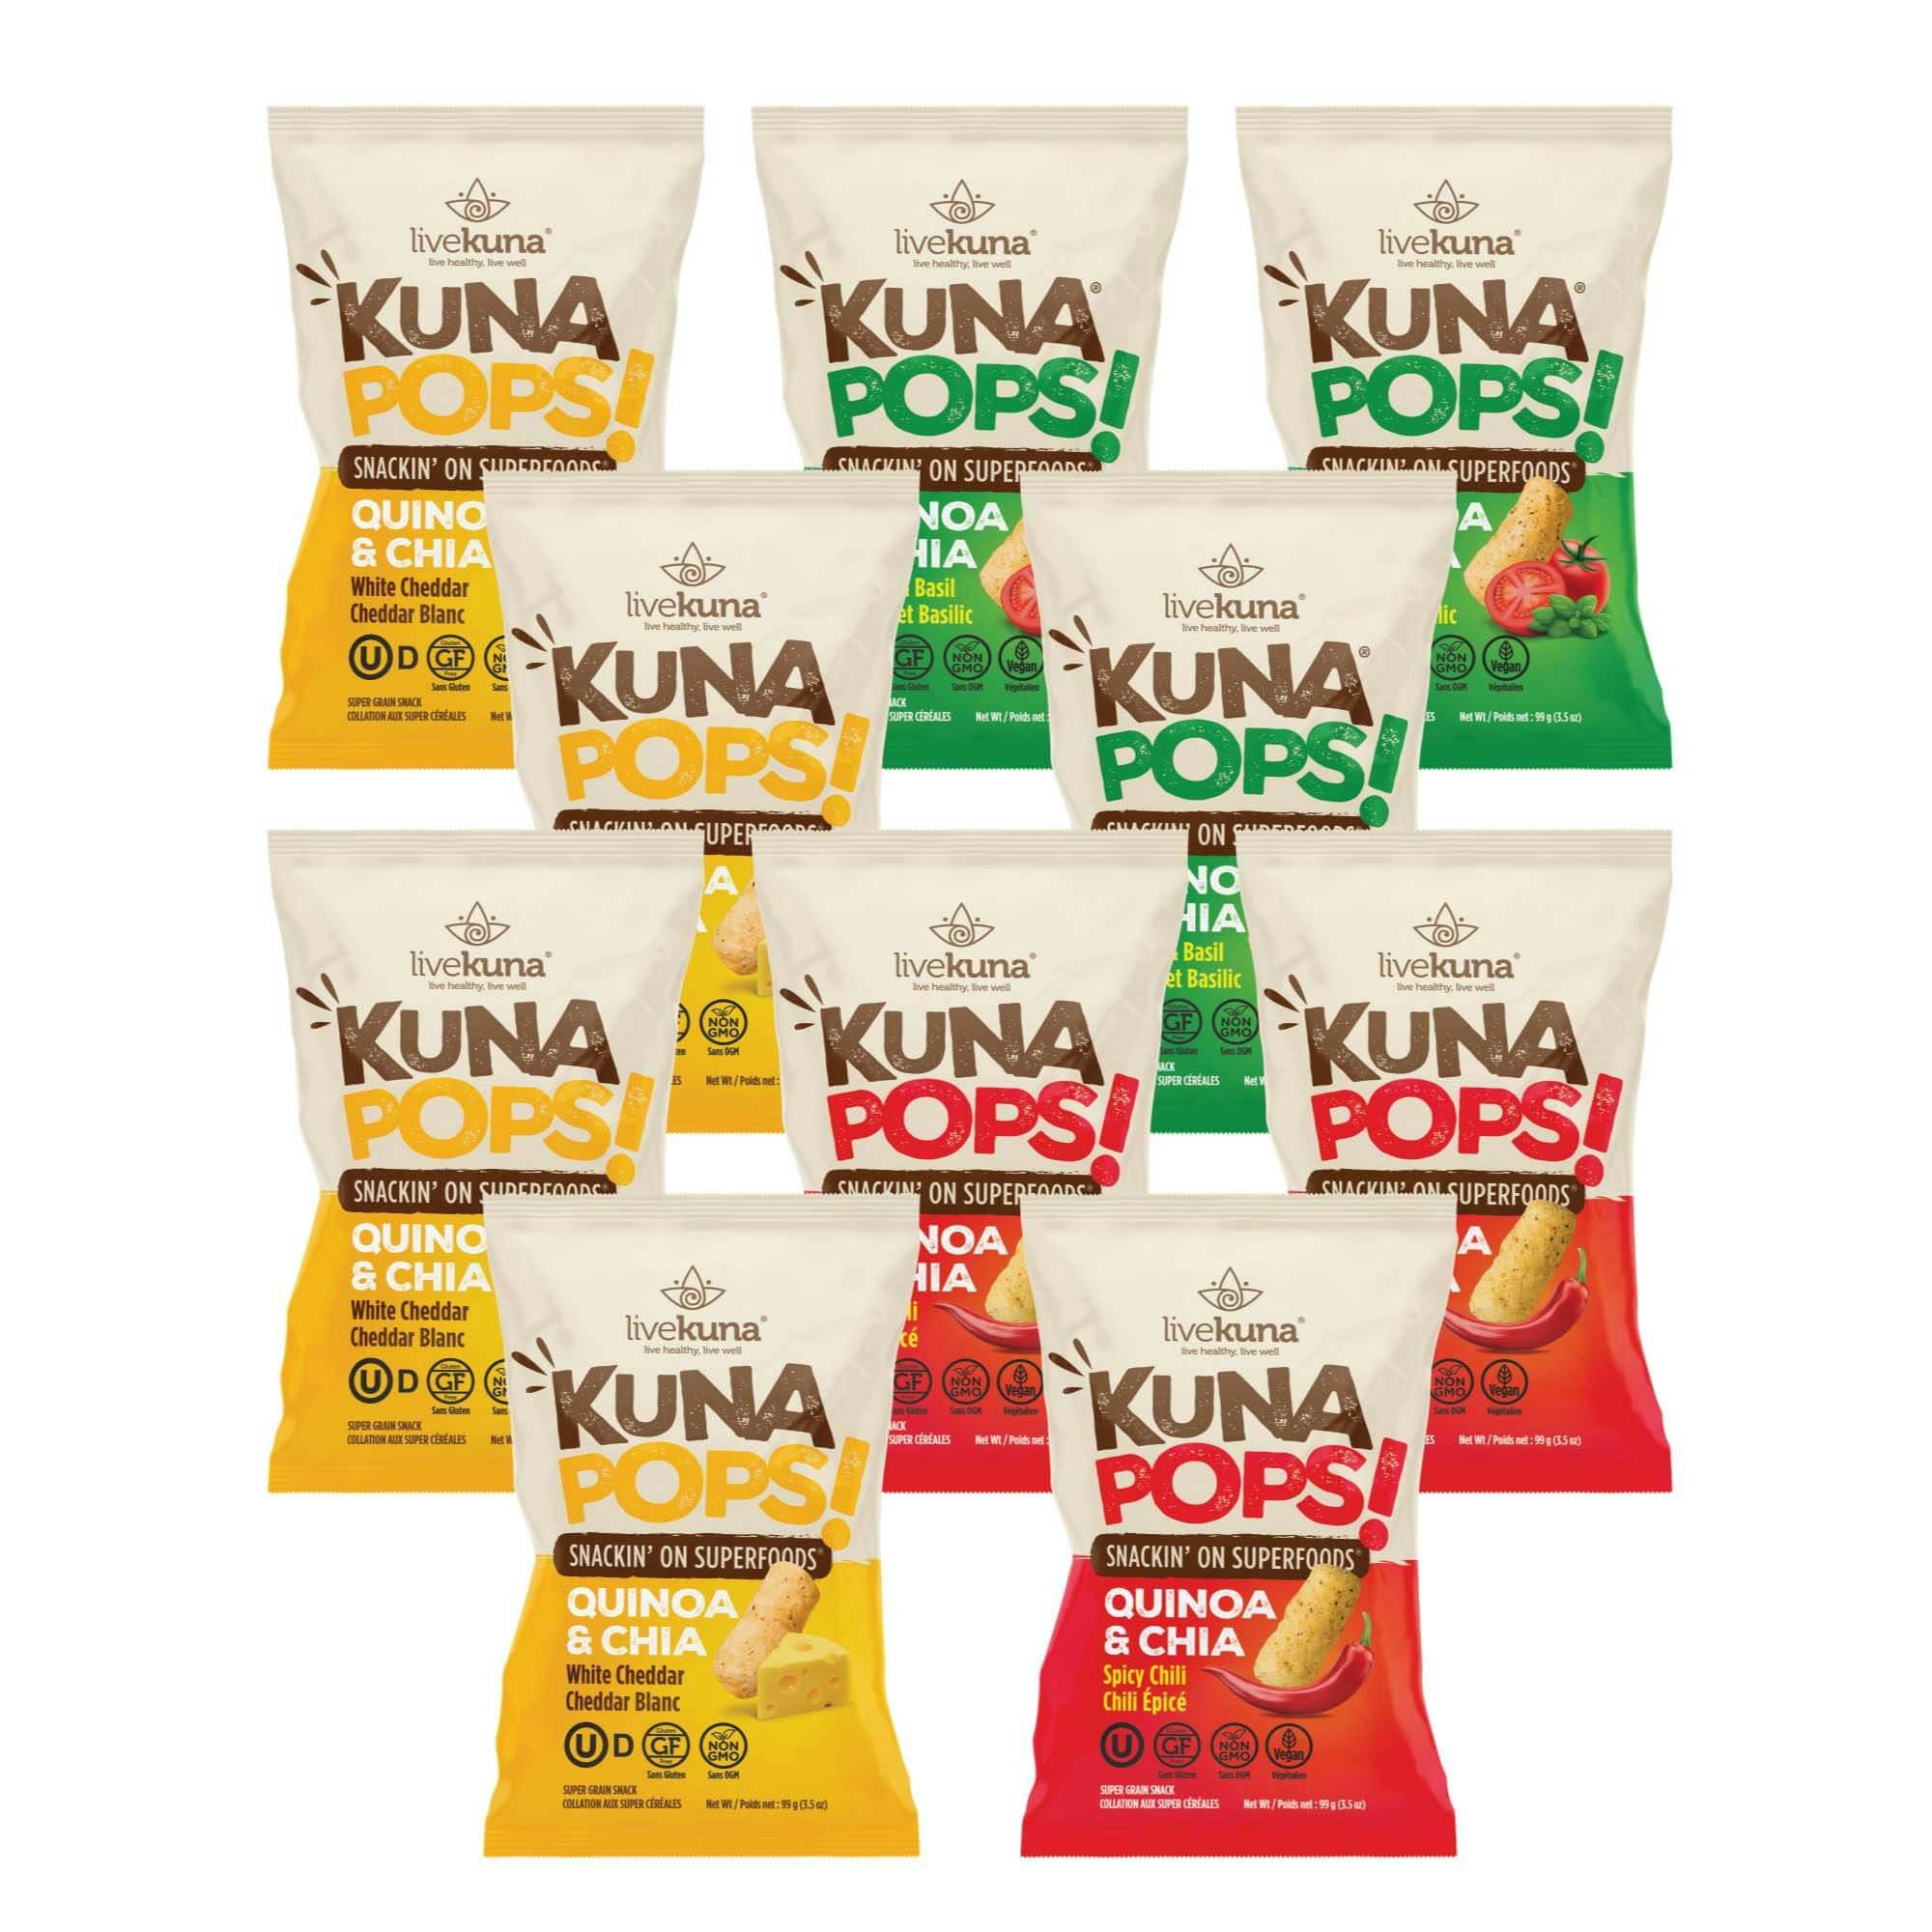 kunapops puffs variety pack 1 2000 x 2000-04.jpg